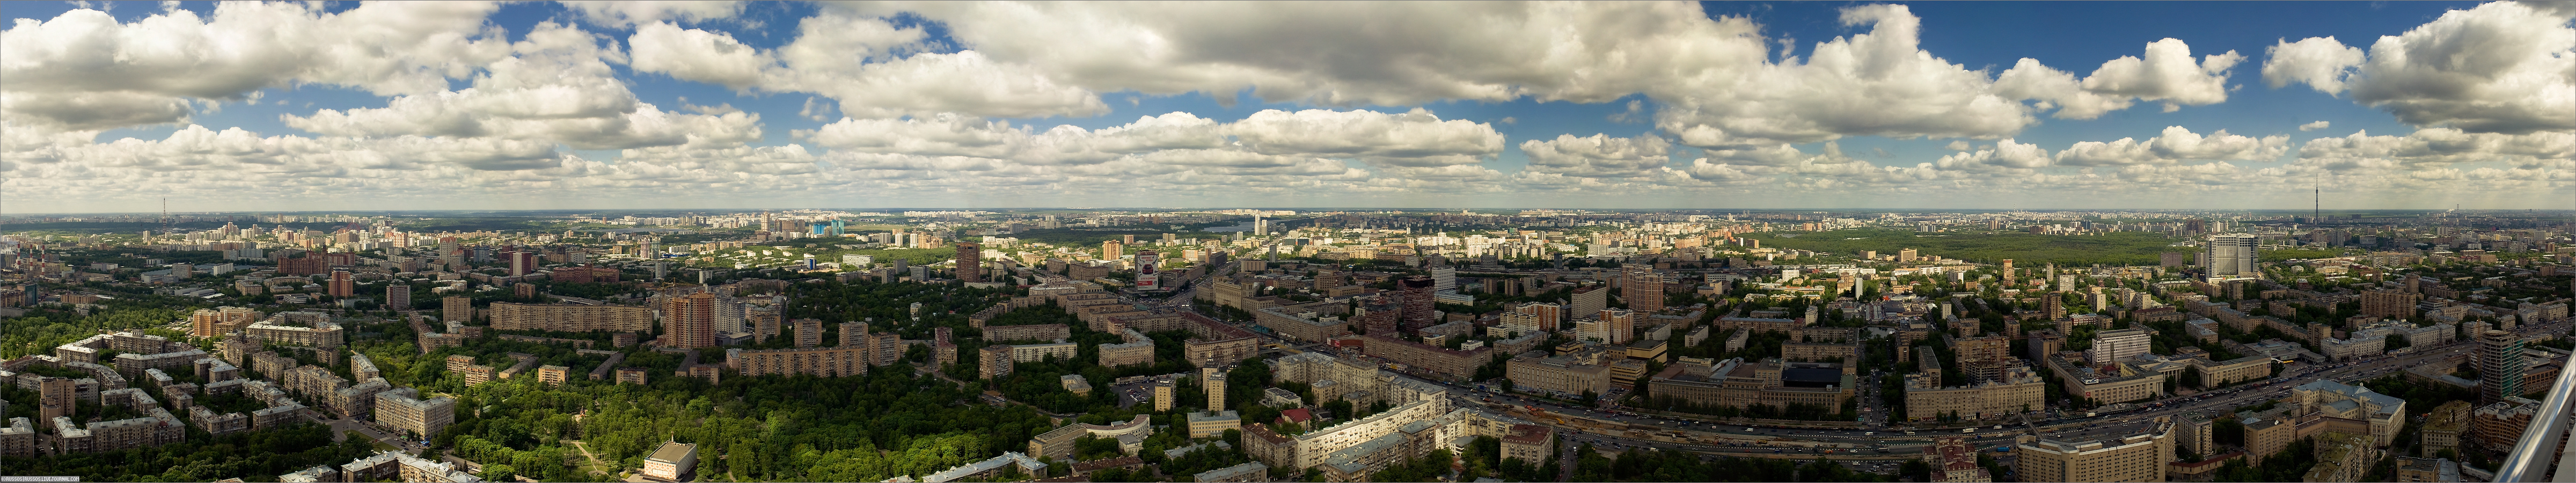 Панорама какая. Москва. Виды панорам. Вид на улицу панорама. Городская панорама Москва.